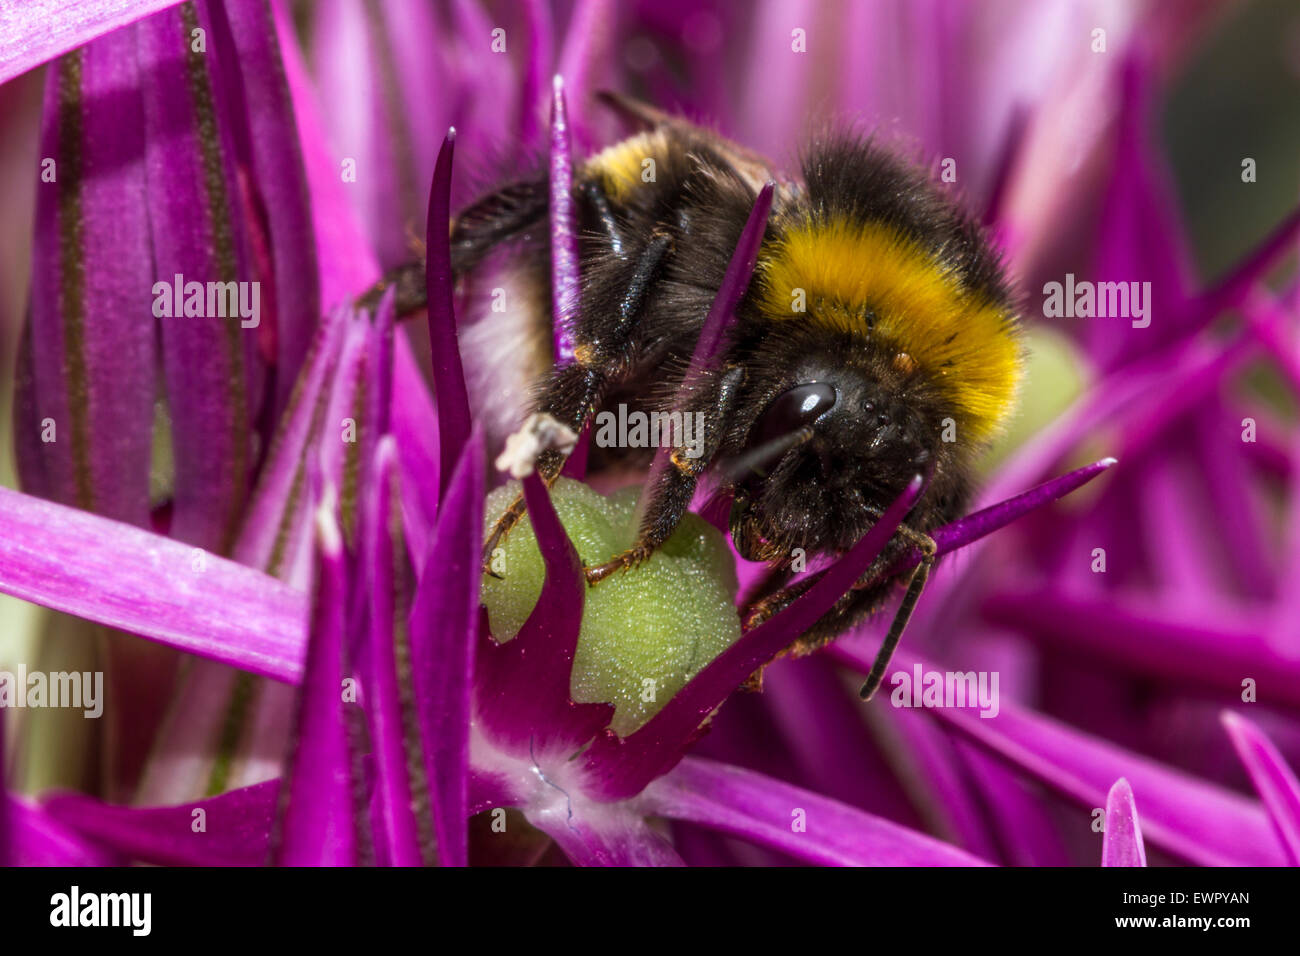 Bumblebee on Allium flower head. Stock Photo